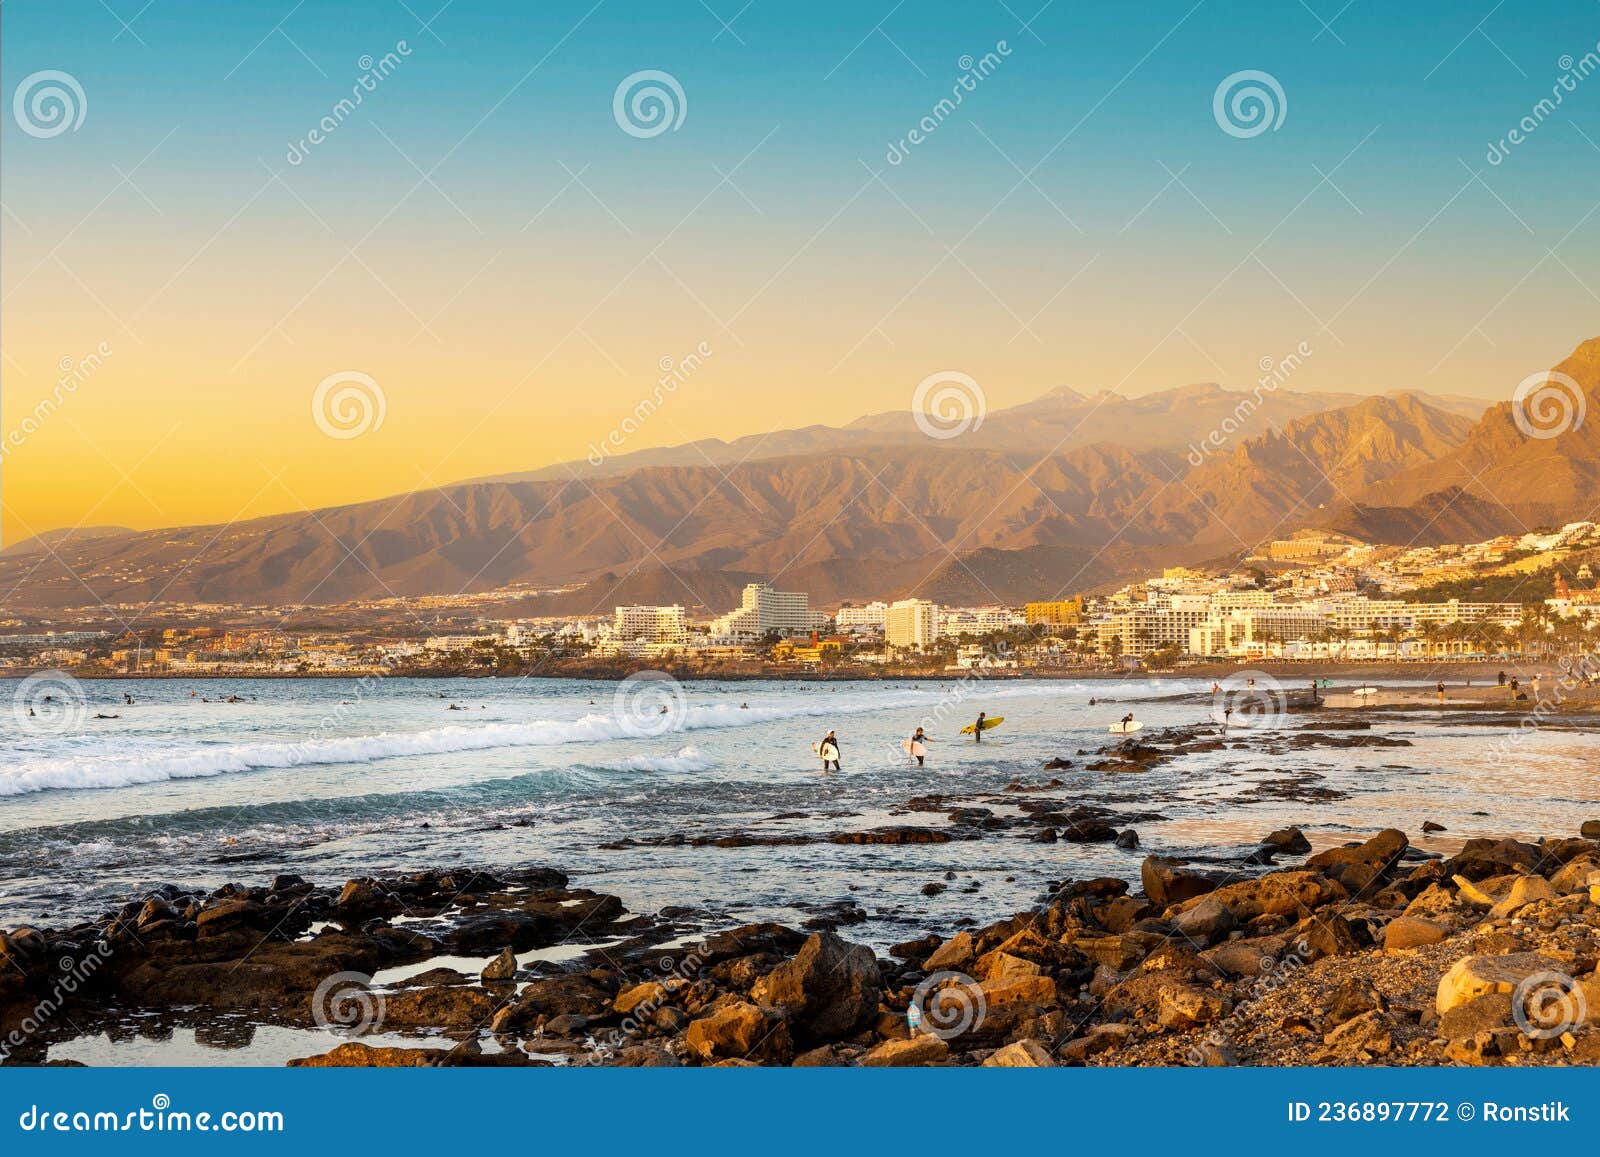 playa de las americas. surfers on the beach in tenerife at sunset